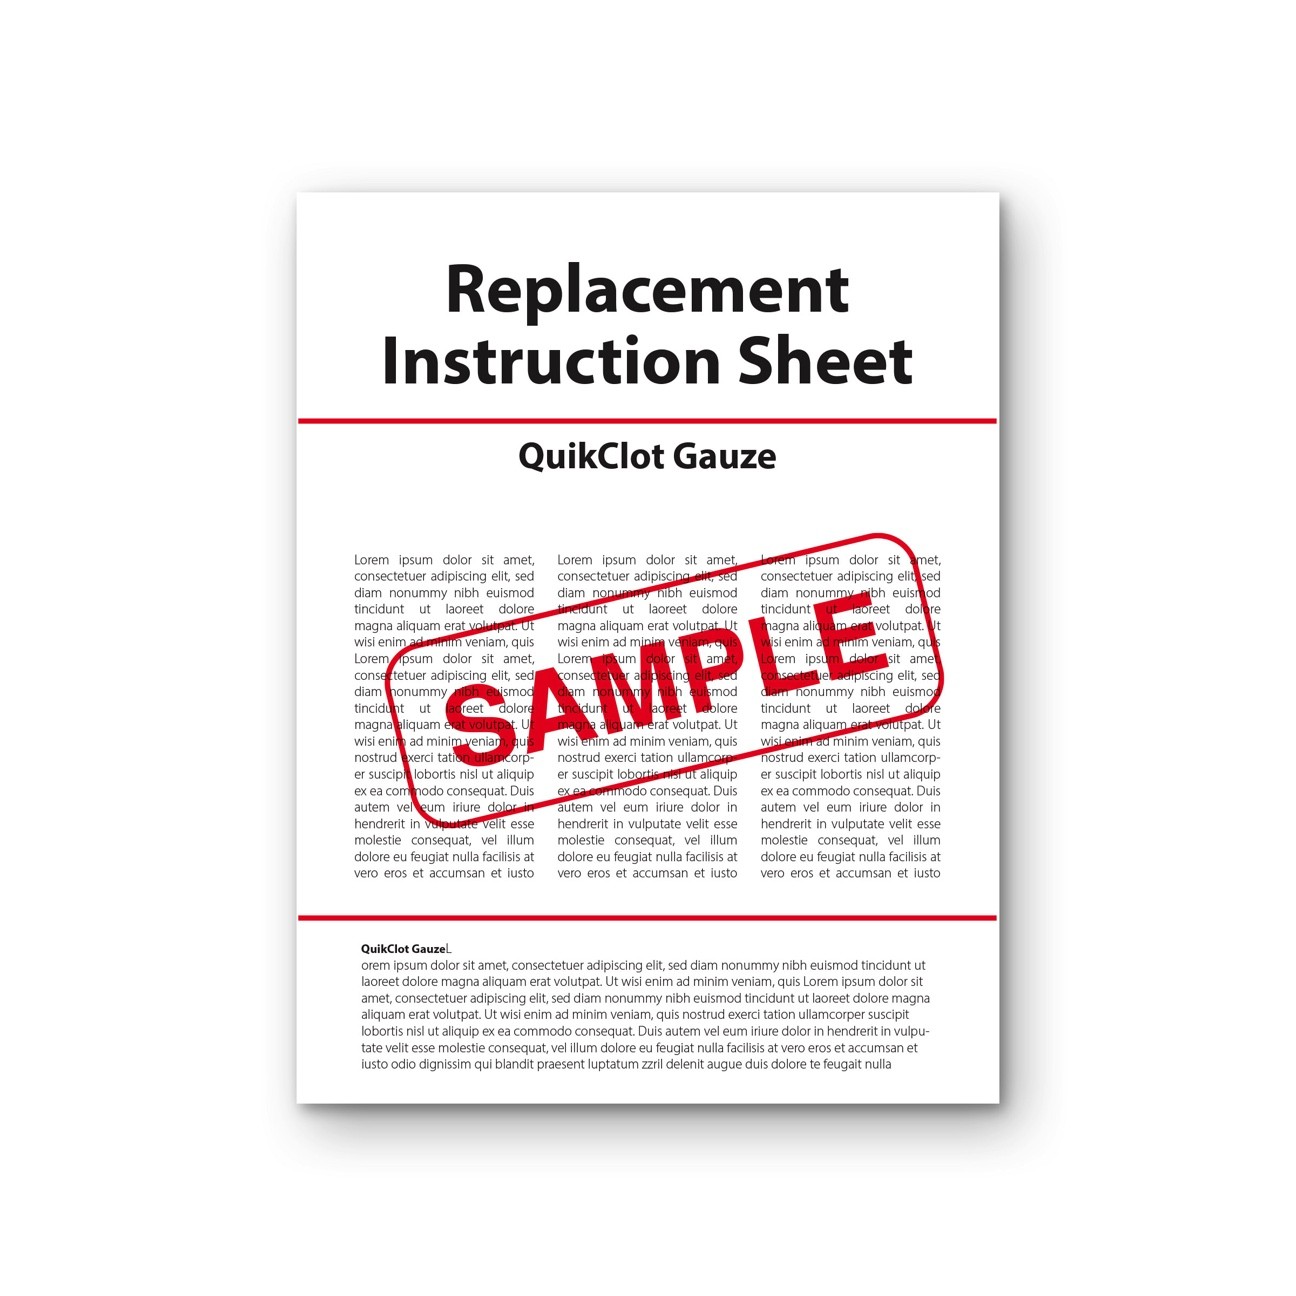 Replacement Instruction Sheet - QuikClot Gauze